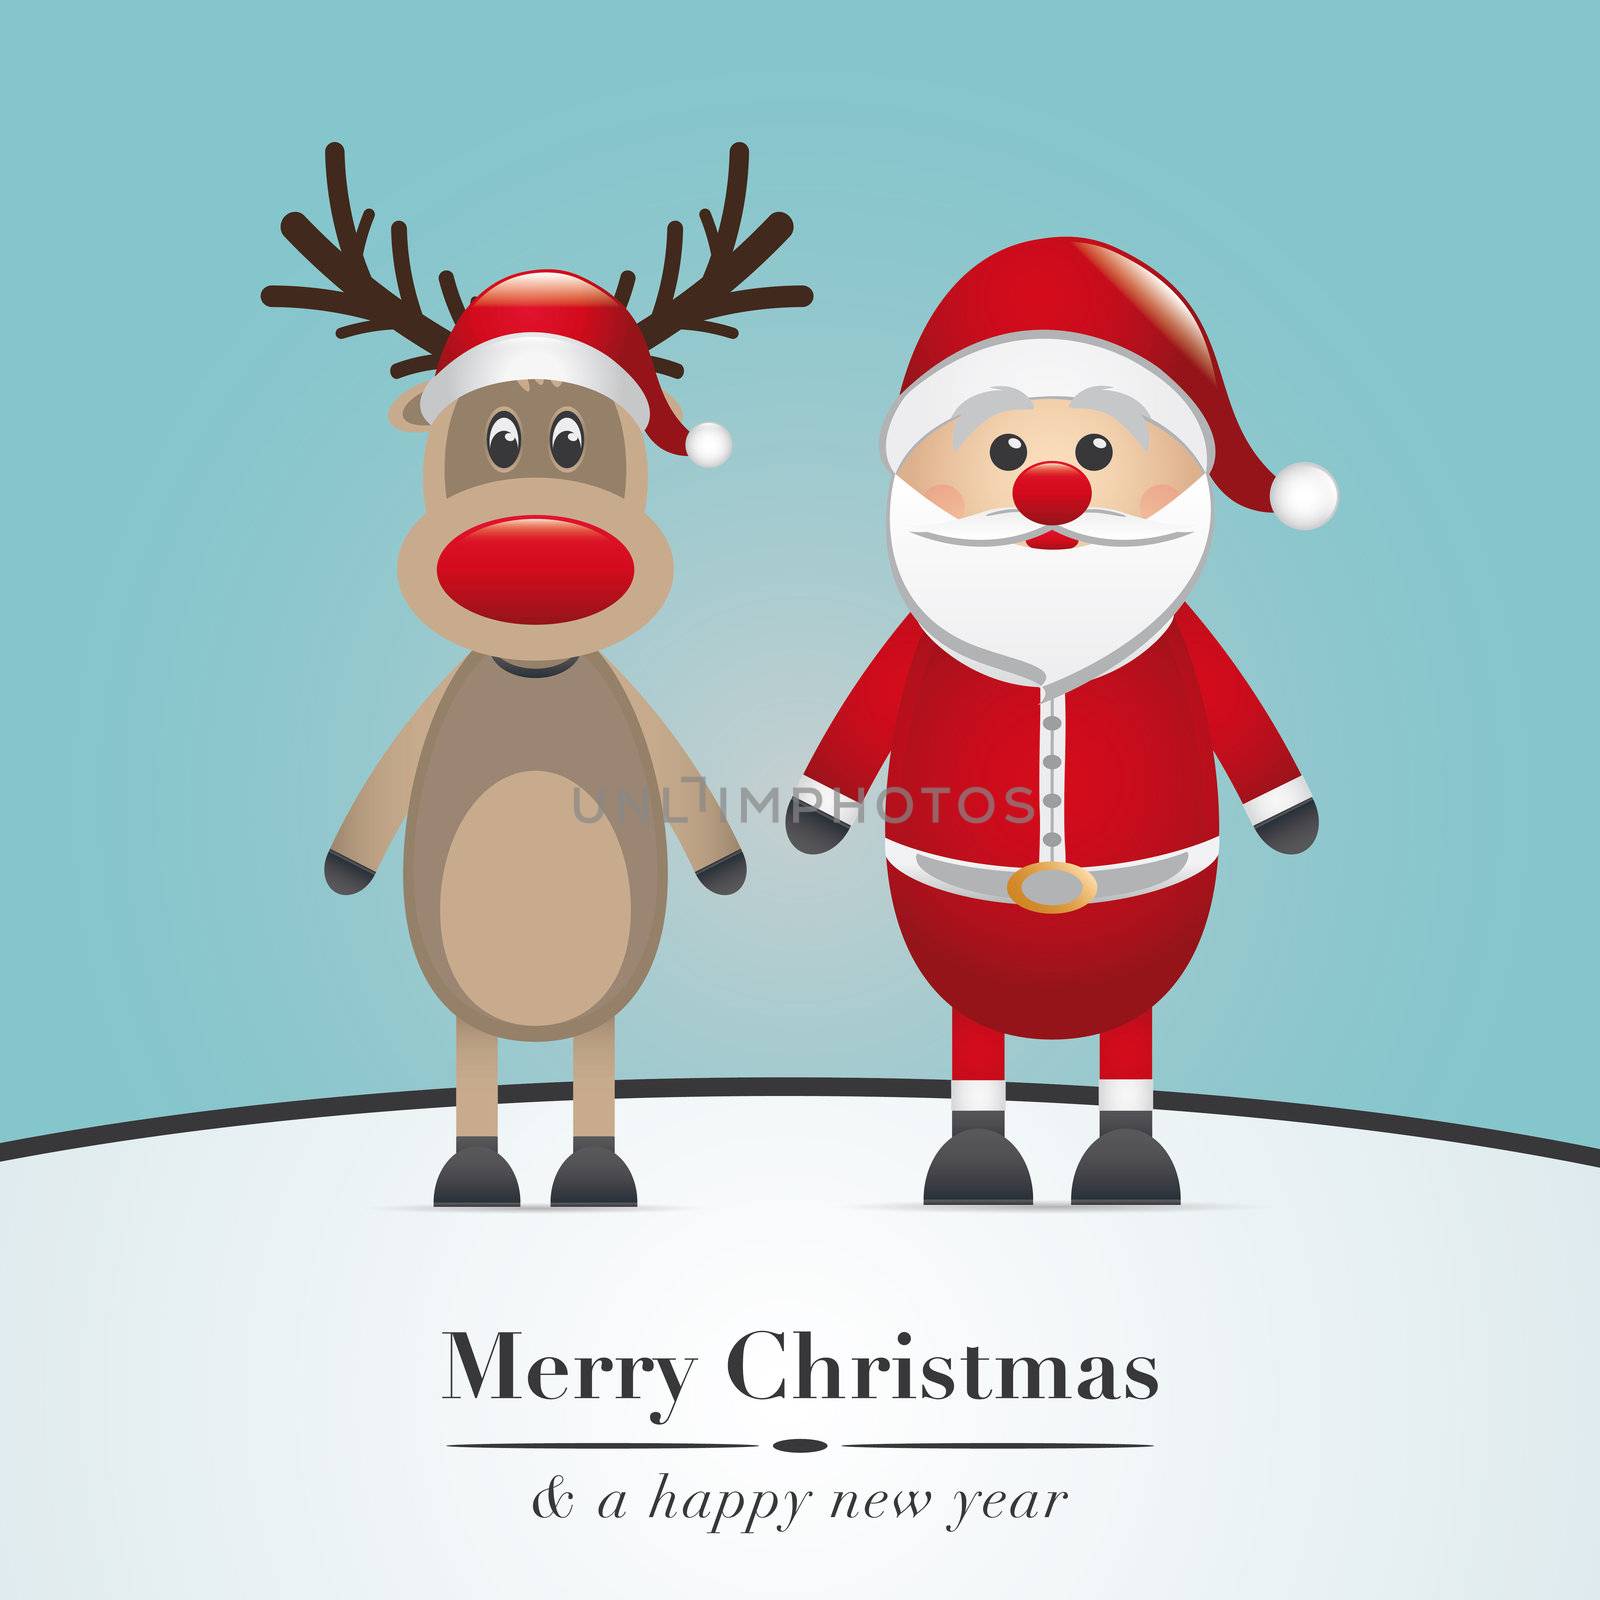 reindeer red nose and santa claus by dariusL